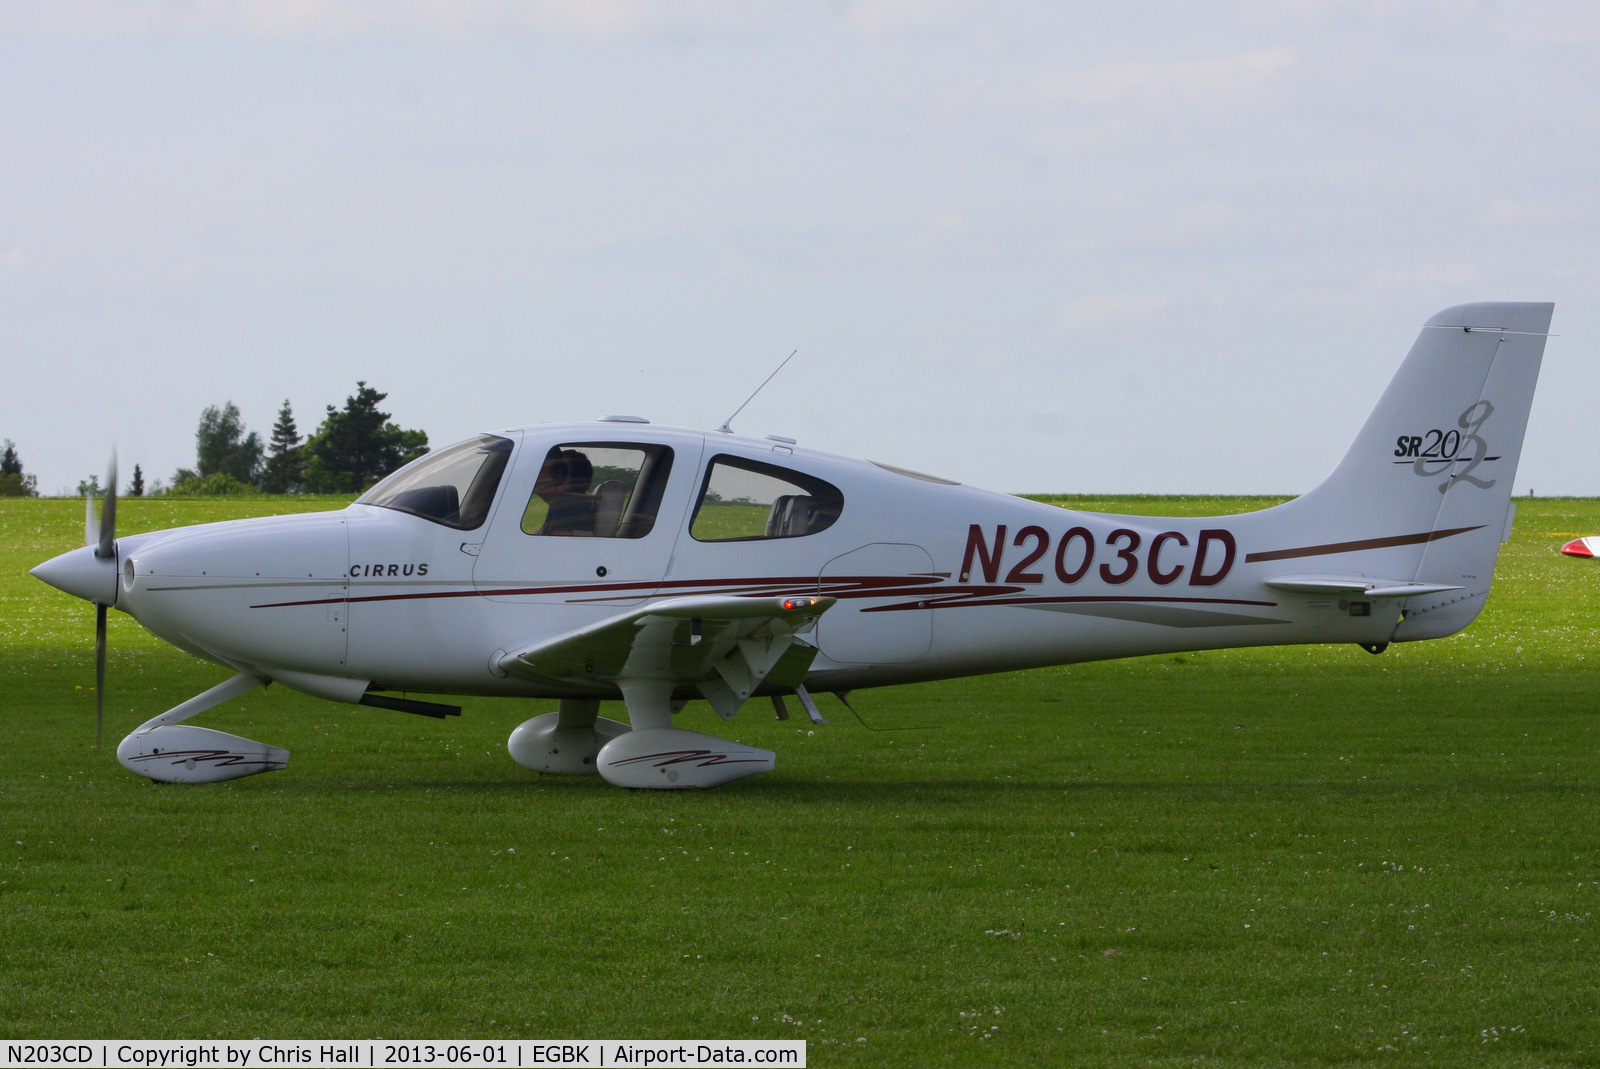 N203CD, 2004 Cirrus SR20 G2 C/N 1451, at AeroExpo 2013